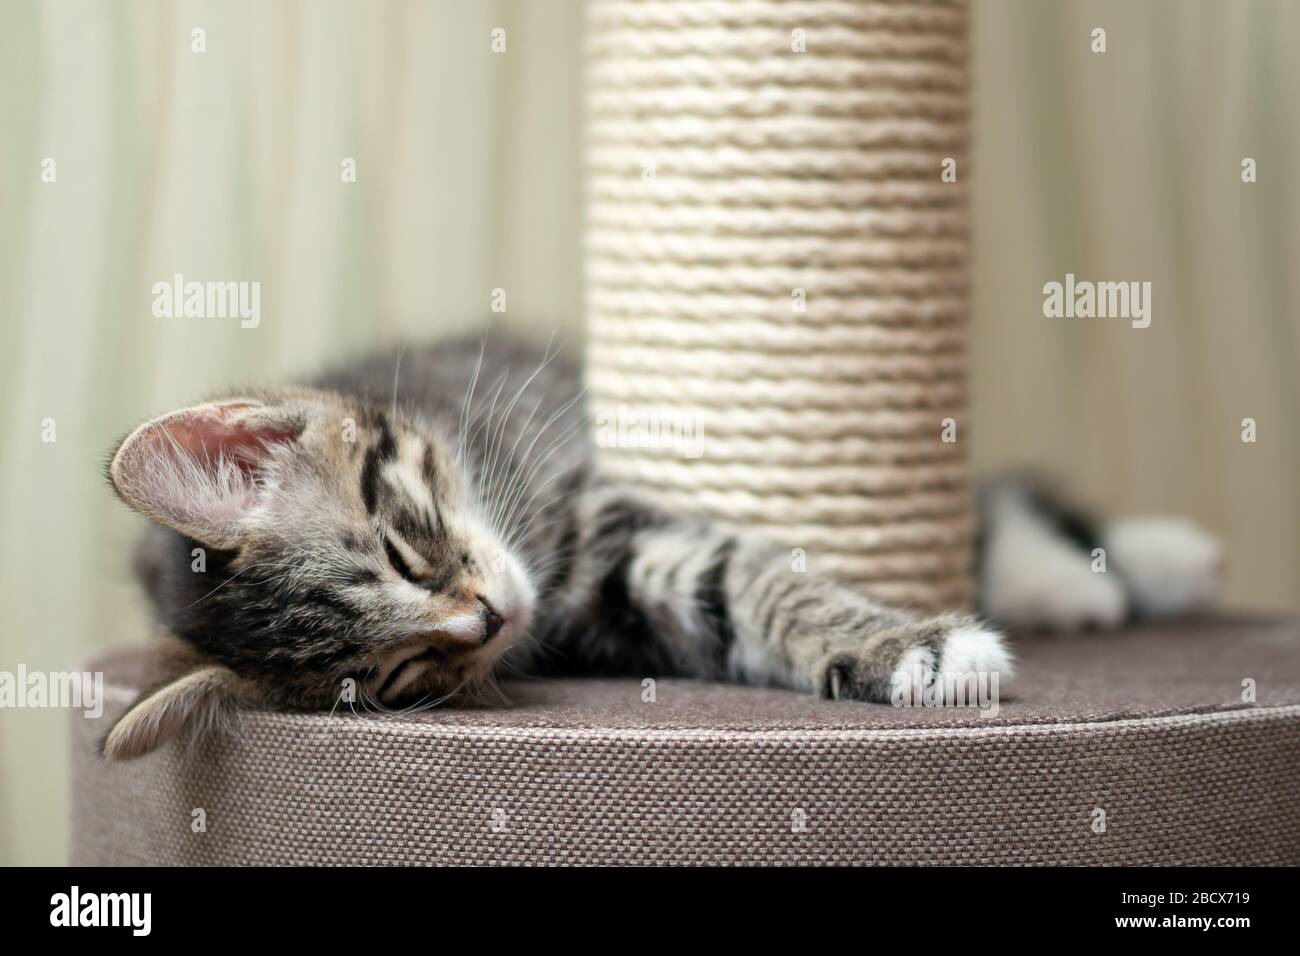 Cute gray tabby kitten sleeping near the scratching post. Stock Photo